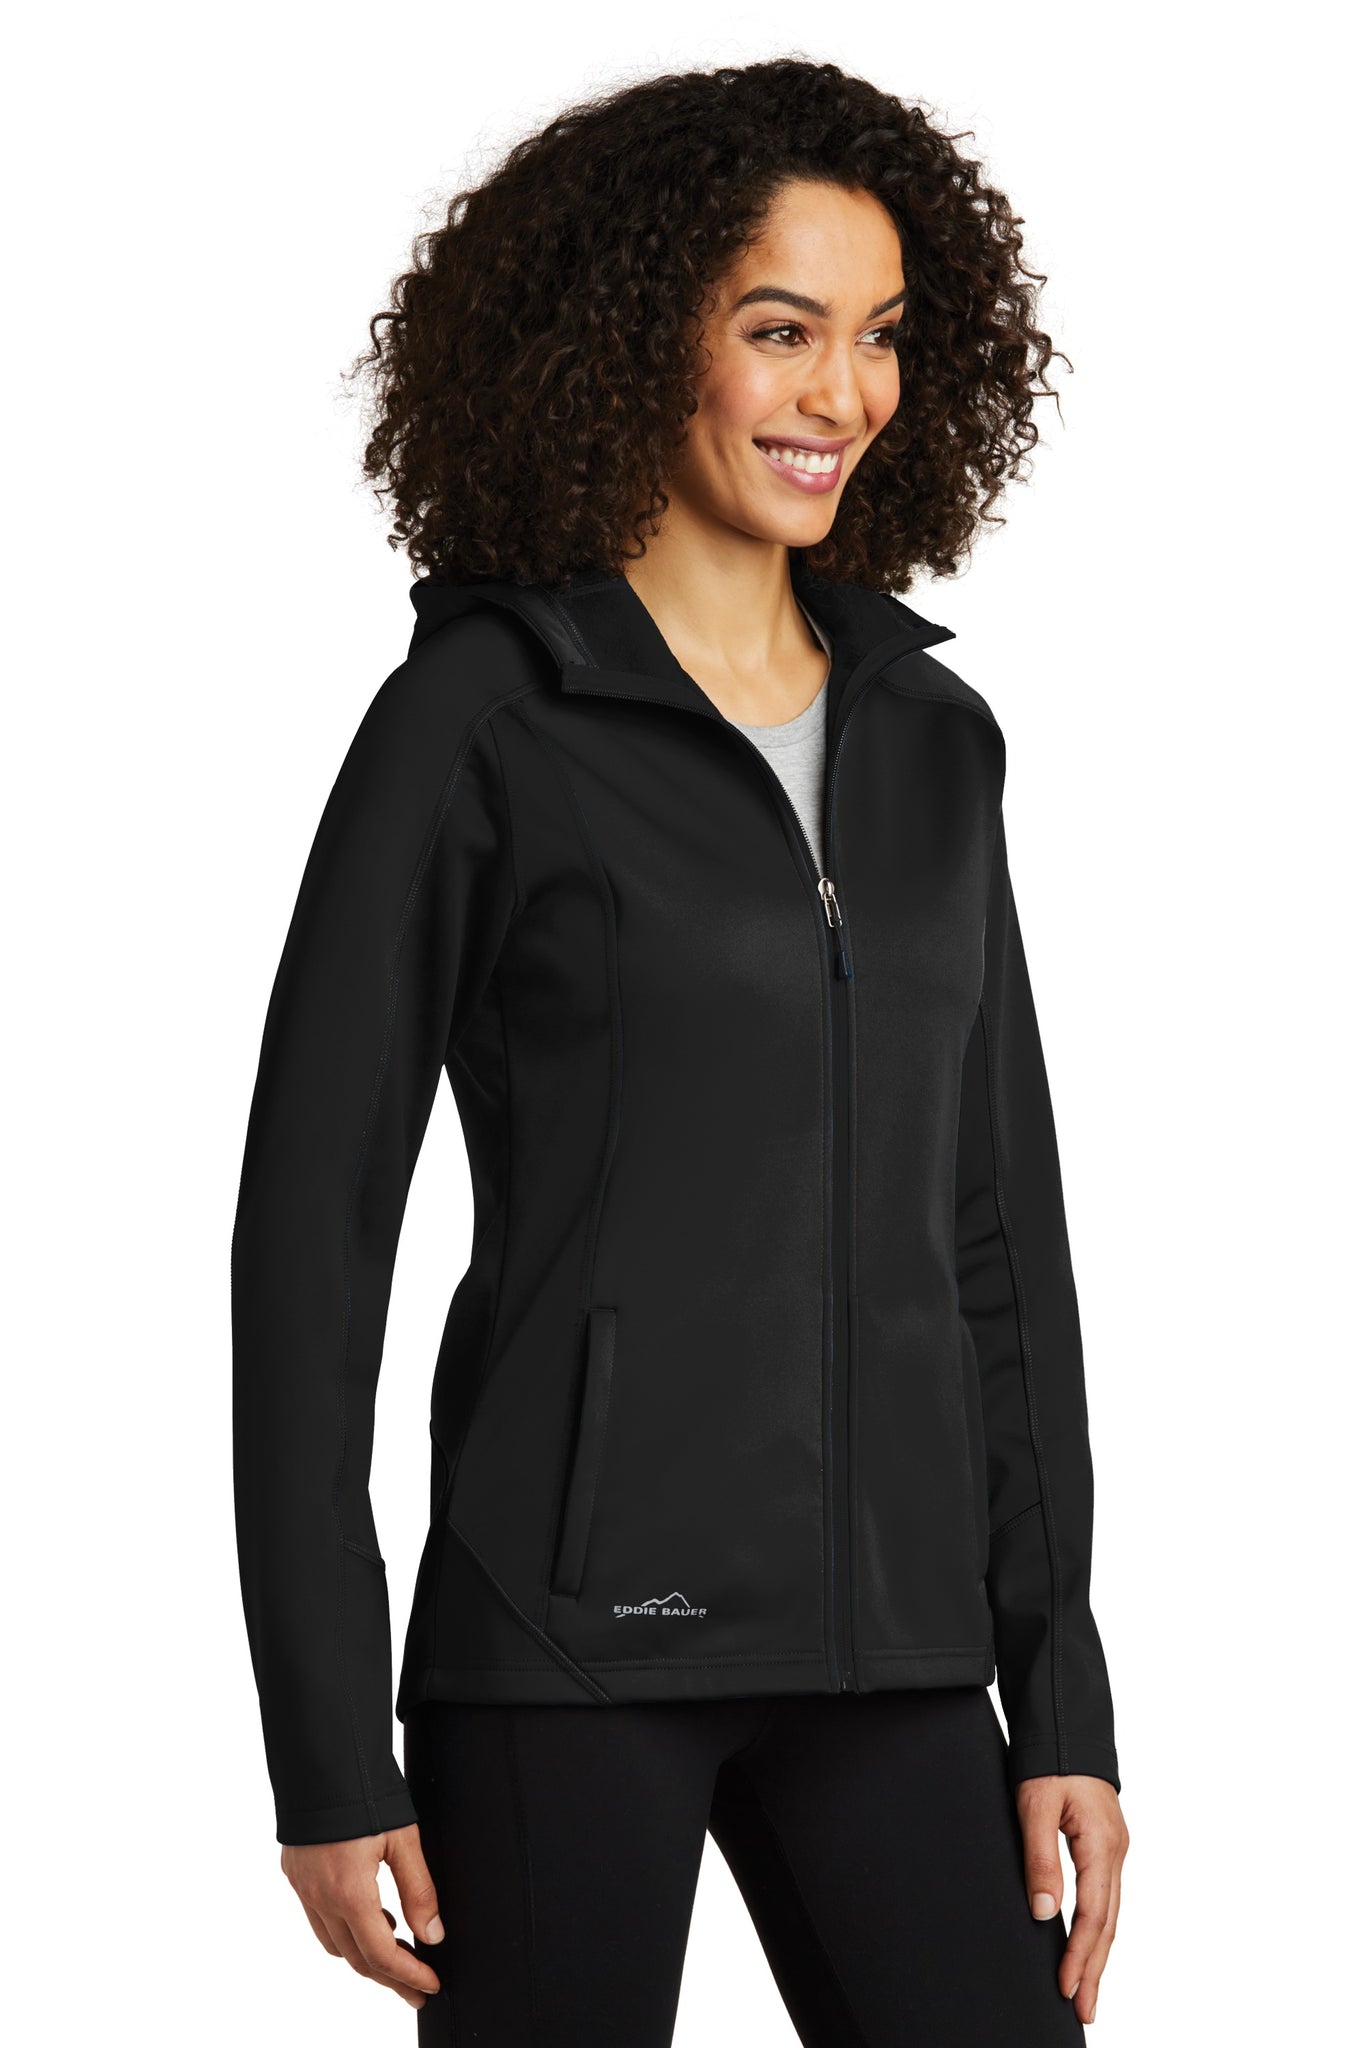 Fornax - Eddie Bauer® Ladies Trail Soft Shell Jacket (EB543